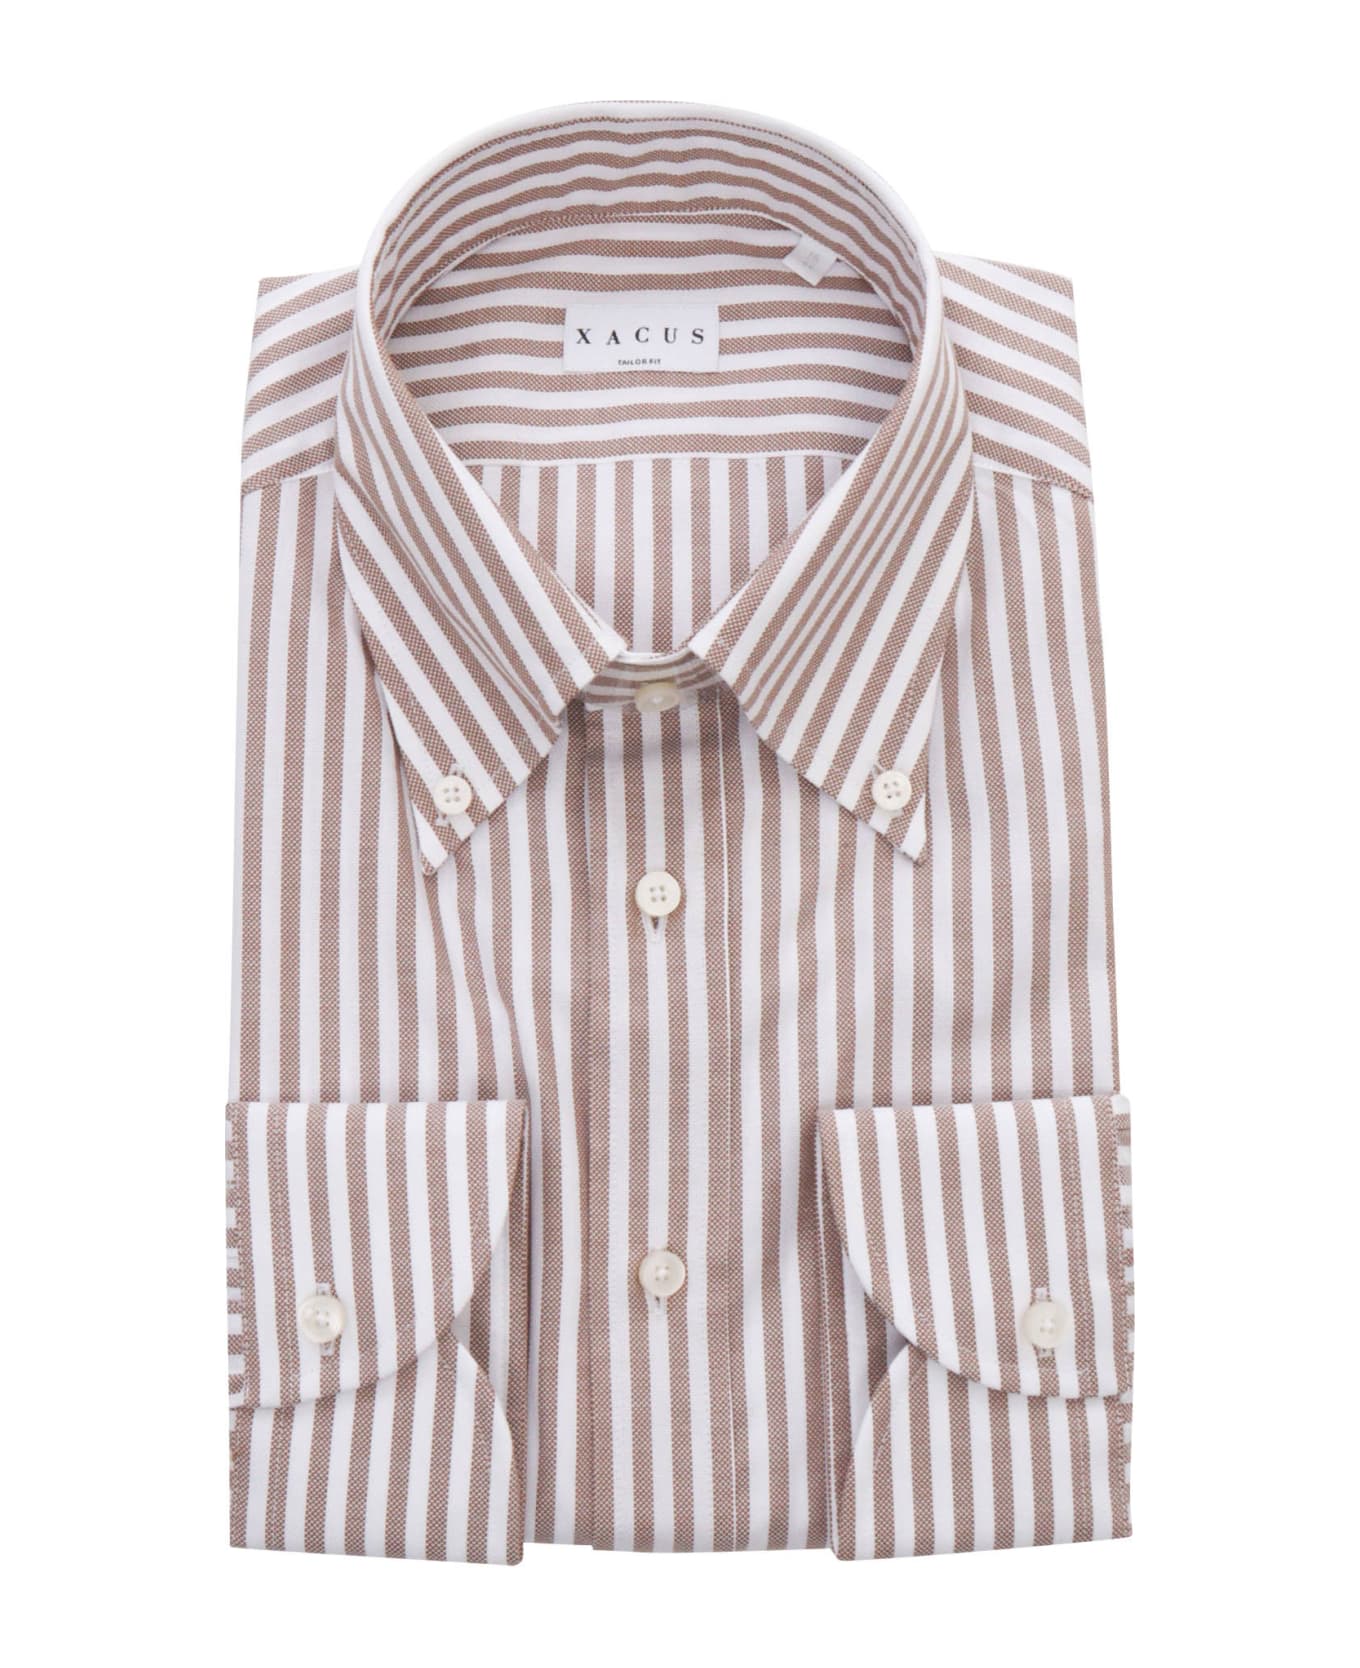 Xacus Brown Striped Cotton Shirt - MULTICOLOR シャツ